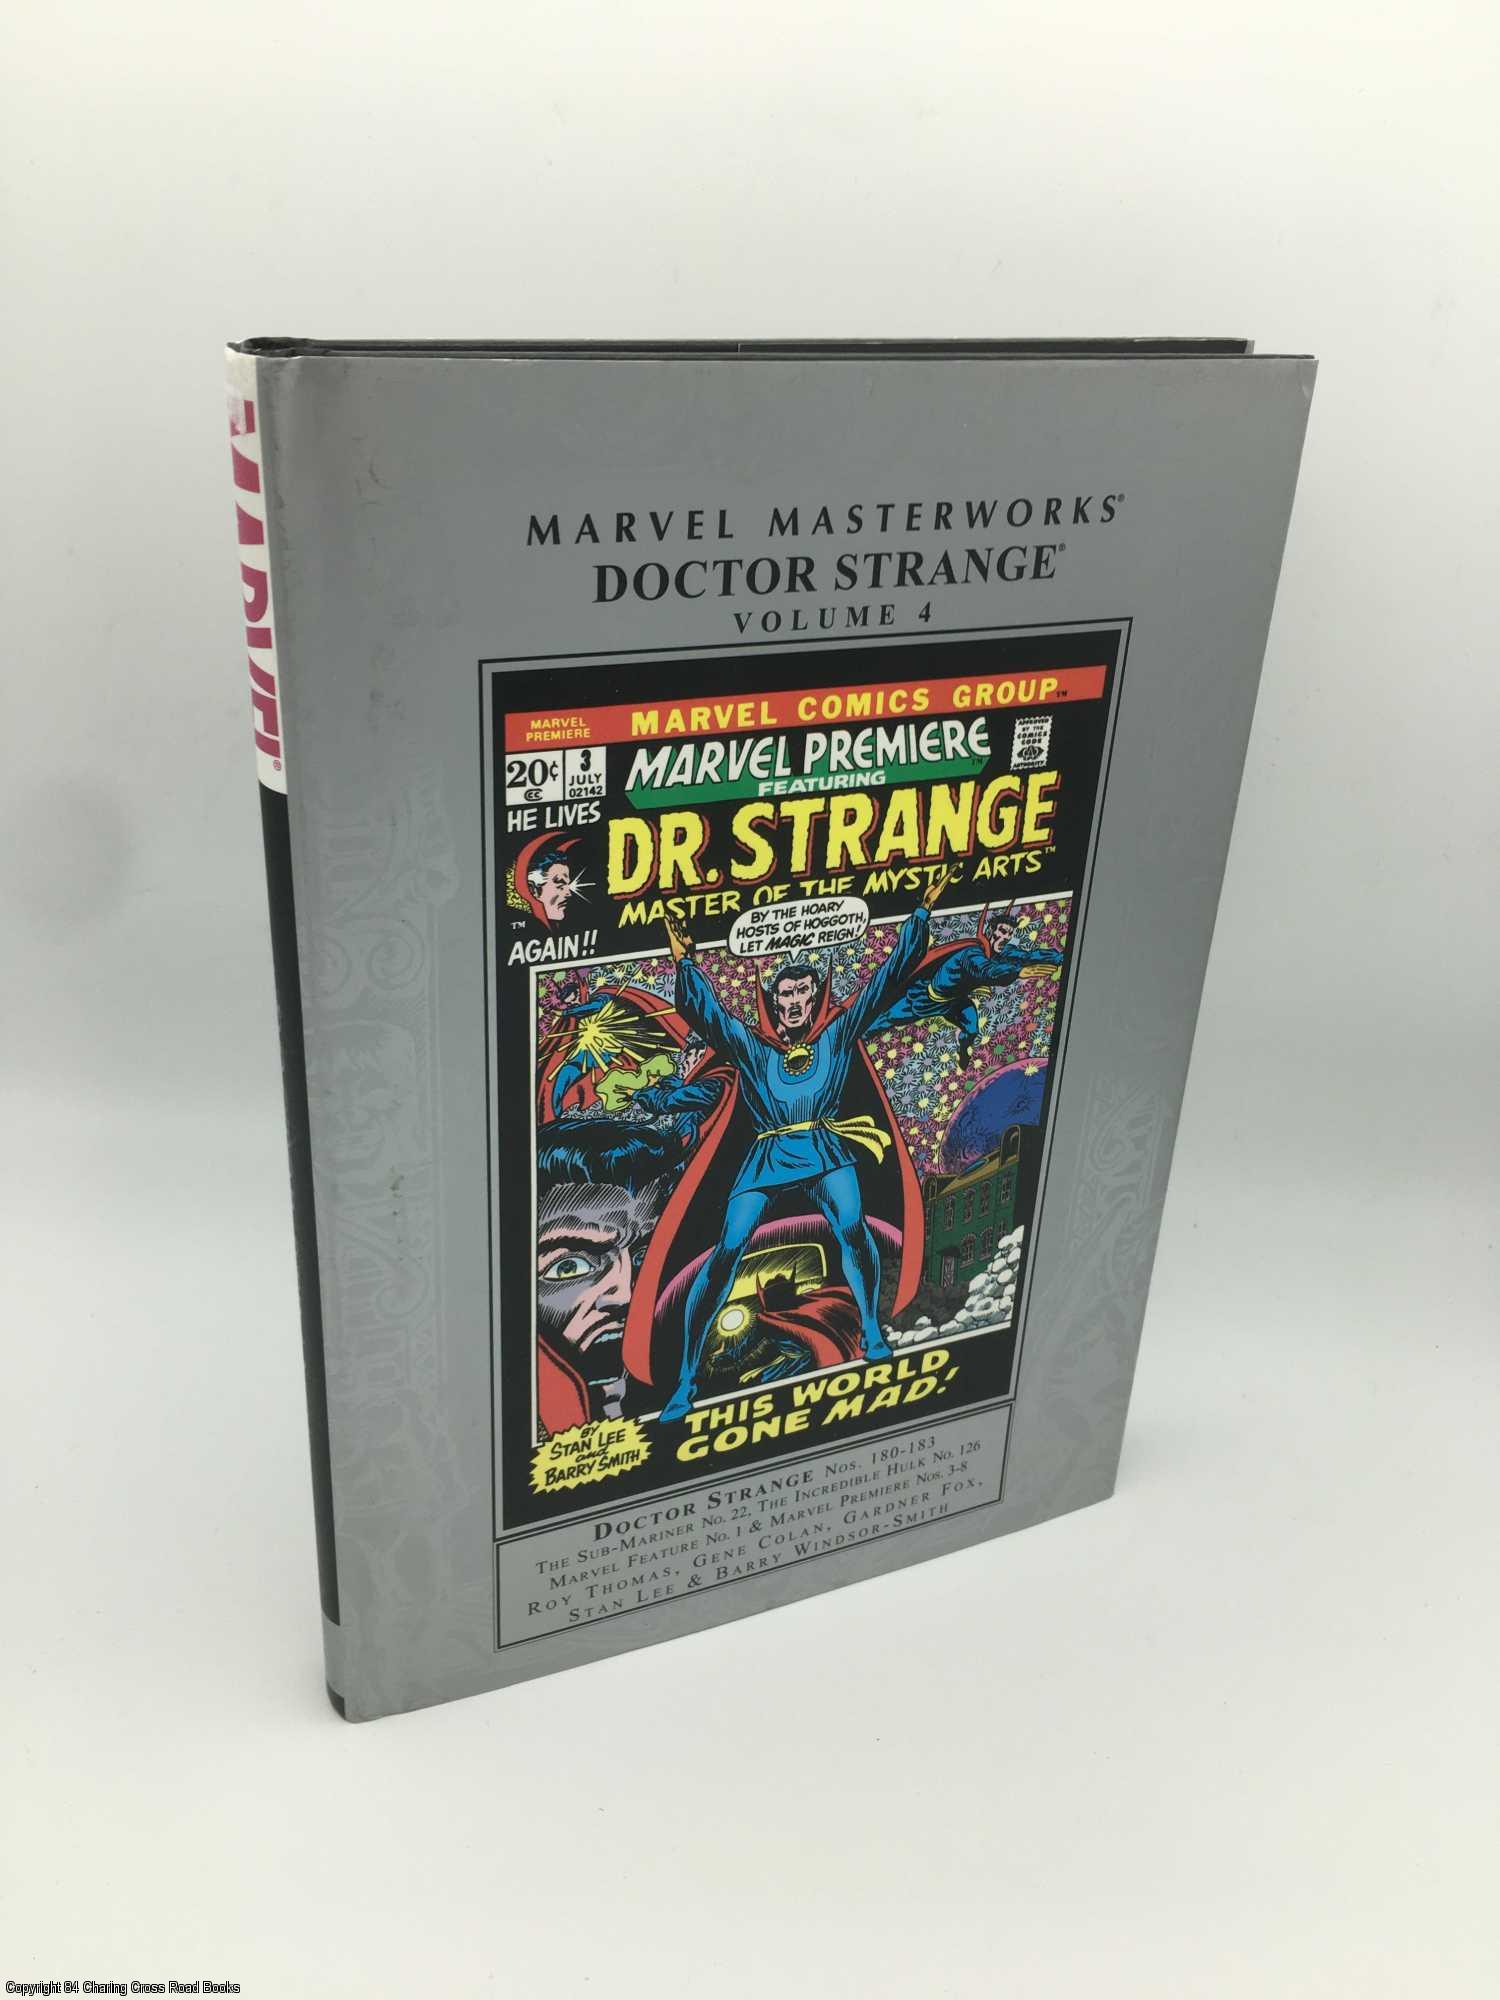  Doctor Strange Masterworks Vol. 3 (Doctor Strange